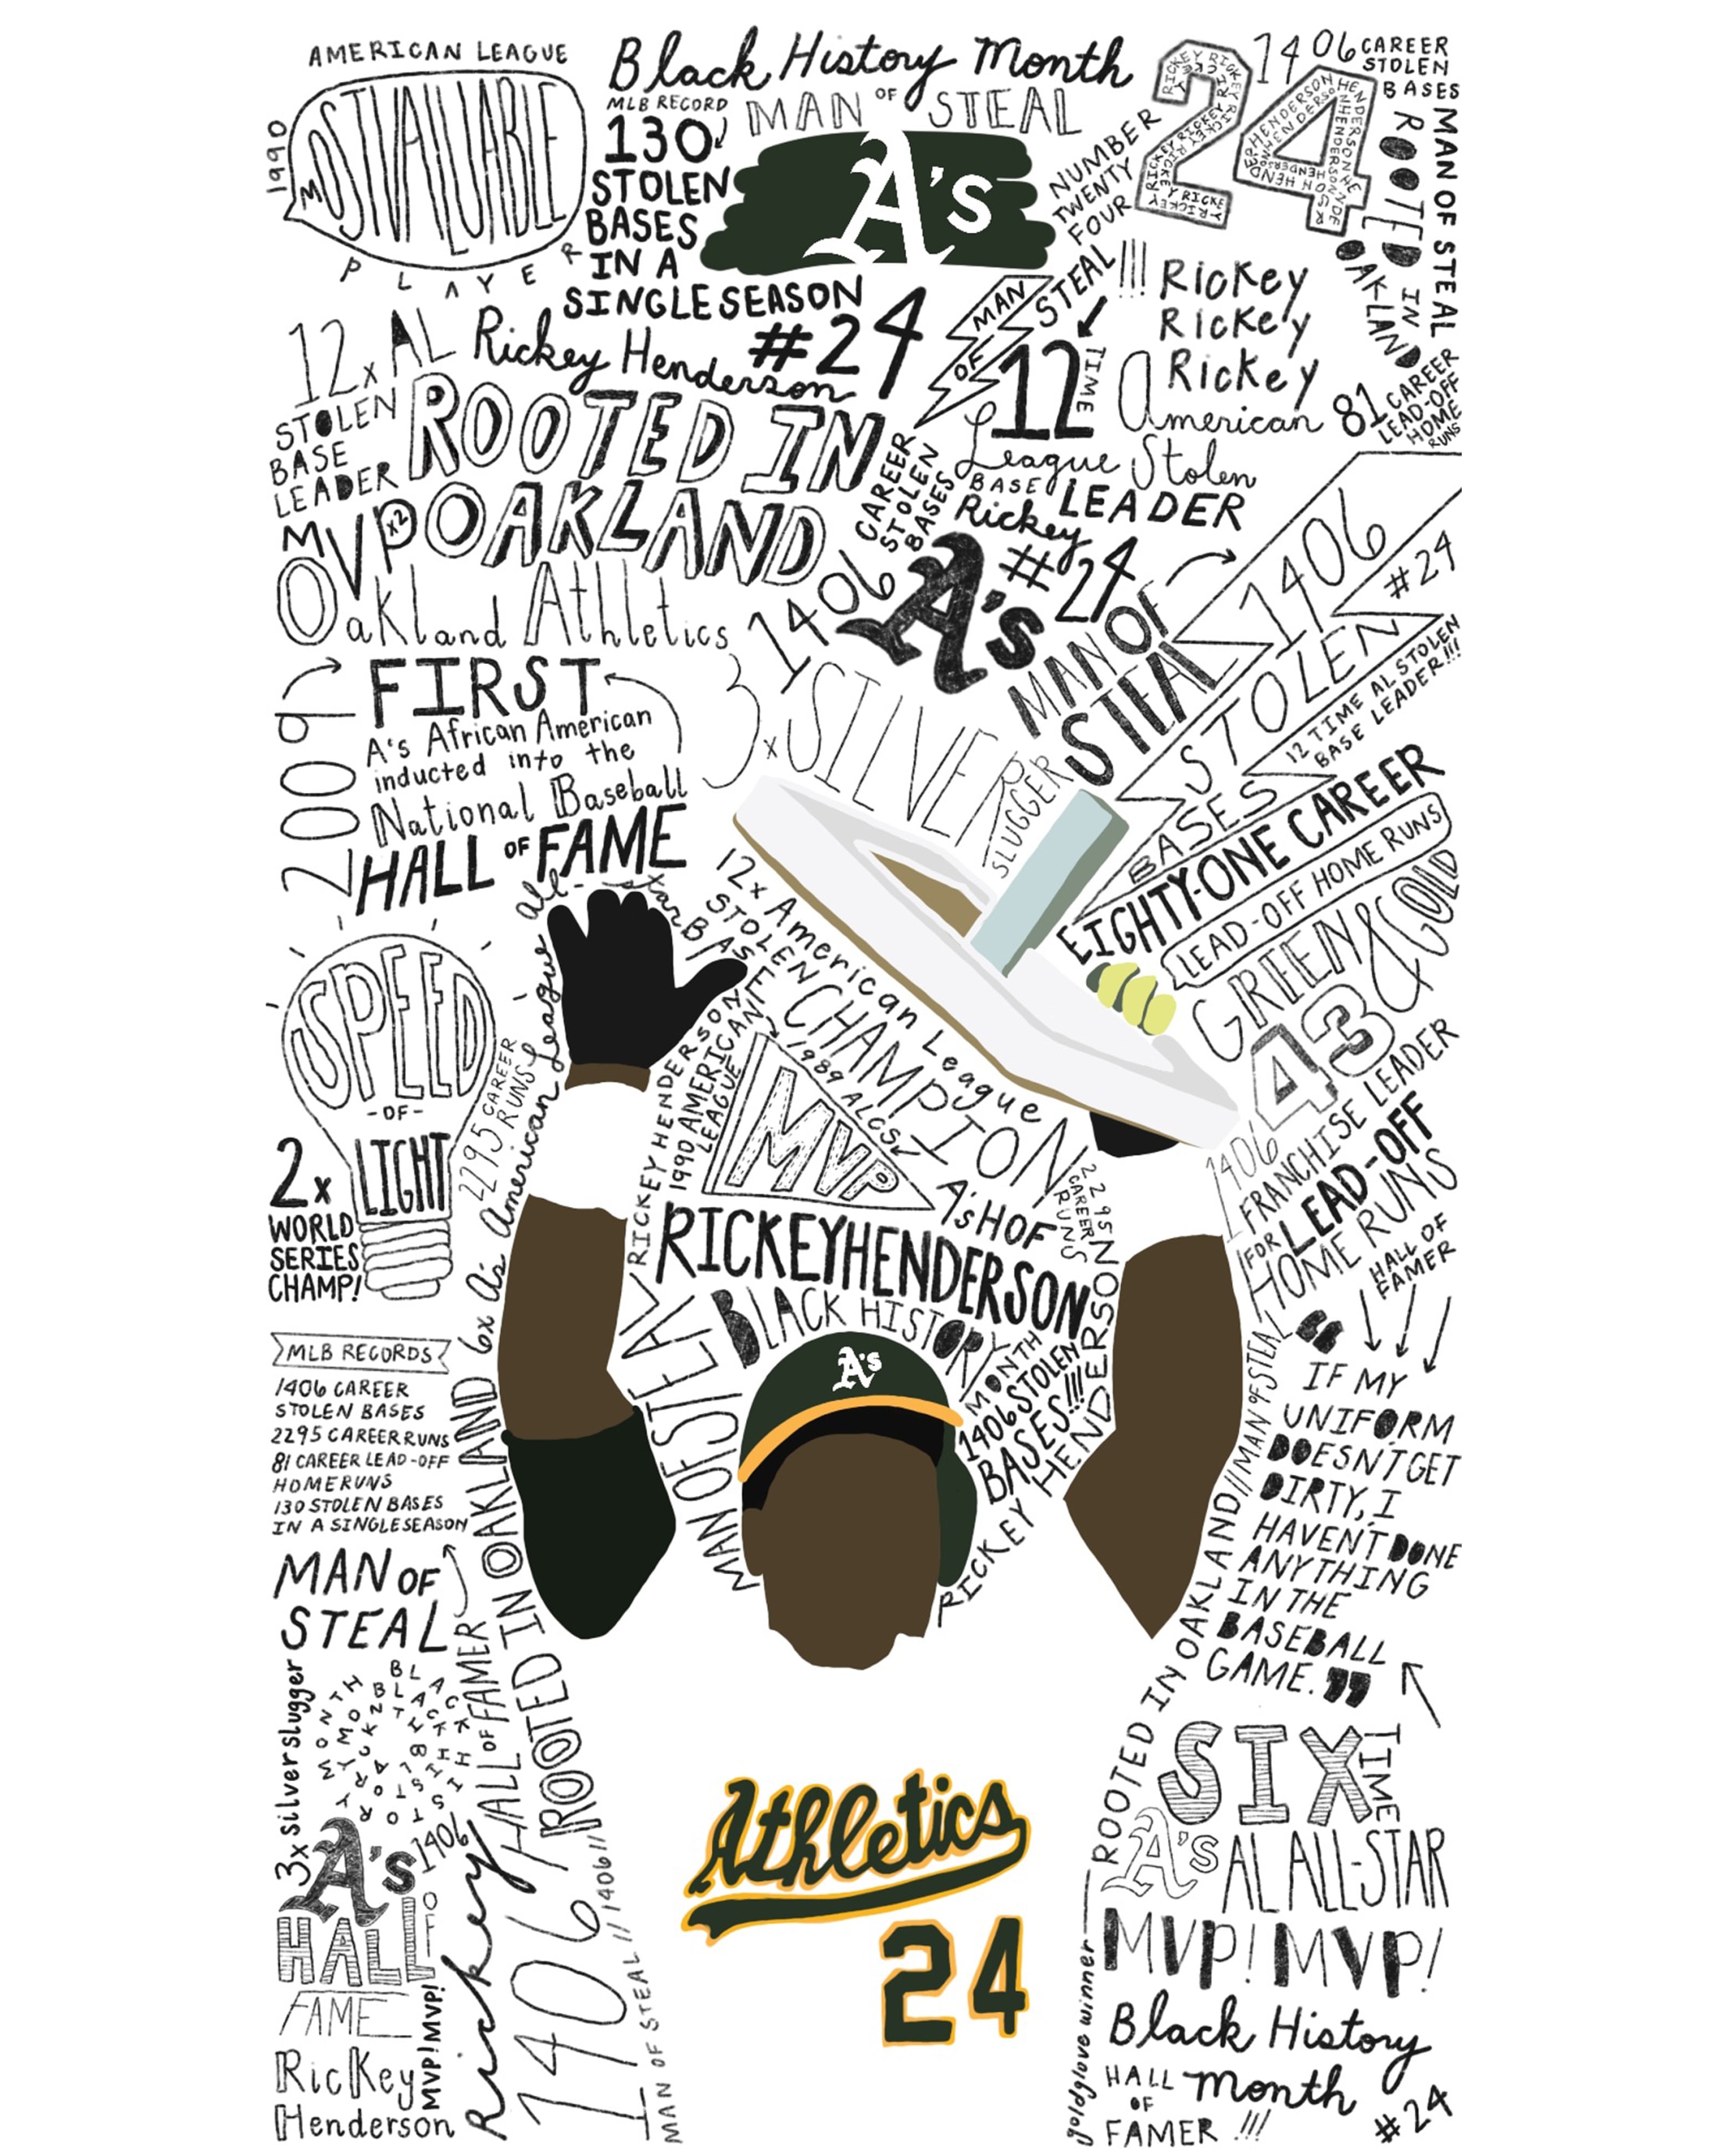 Oakland Athletics Wallpapers